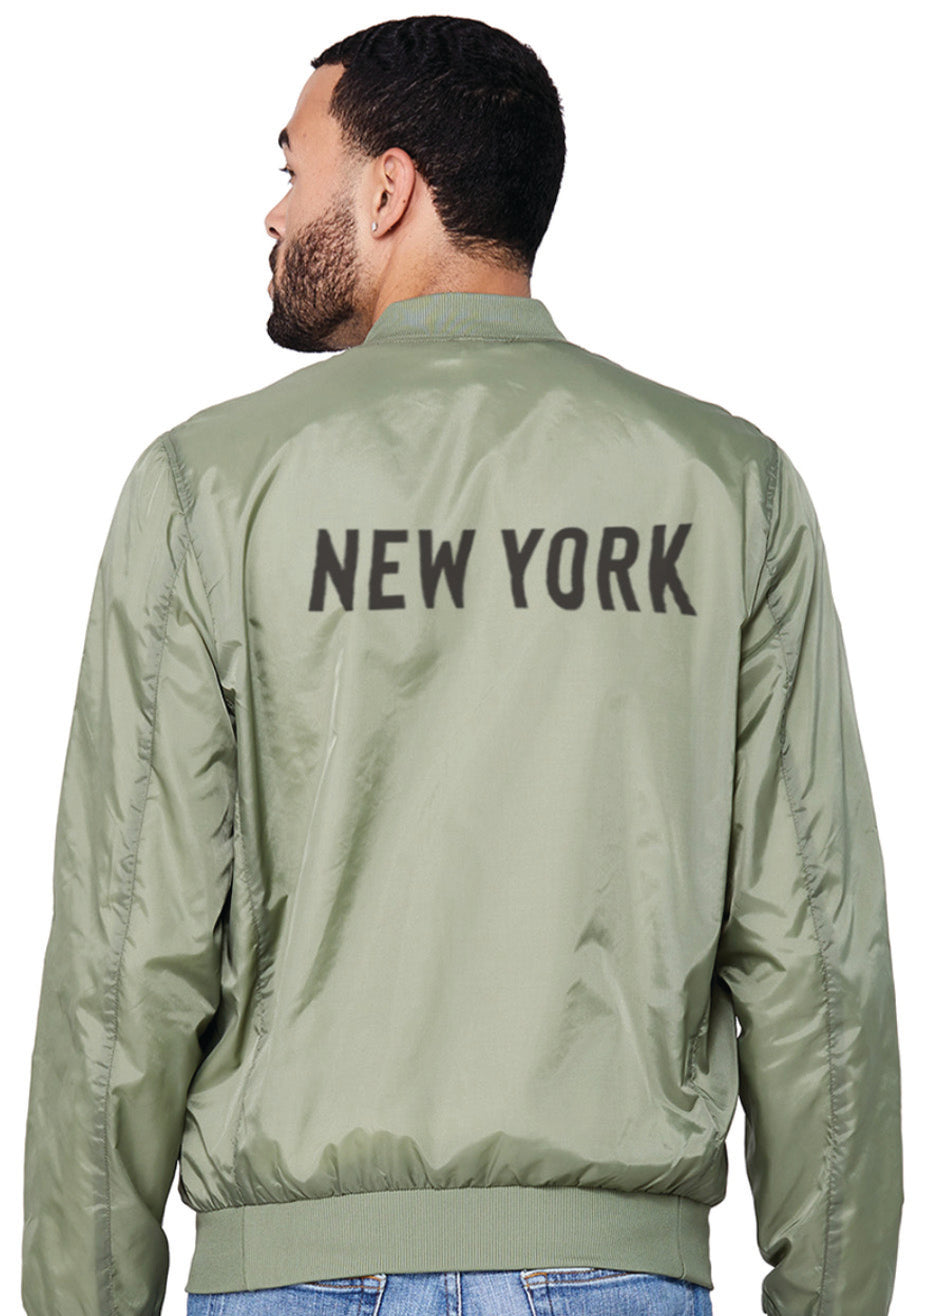 New York Bomber Jacket